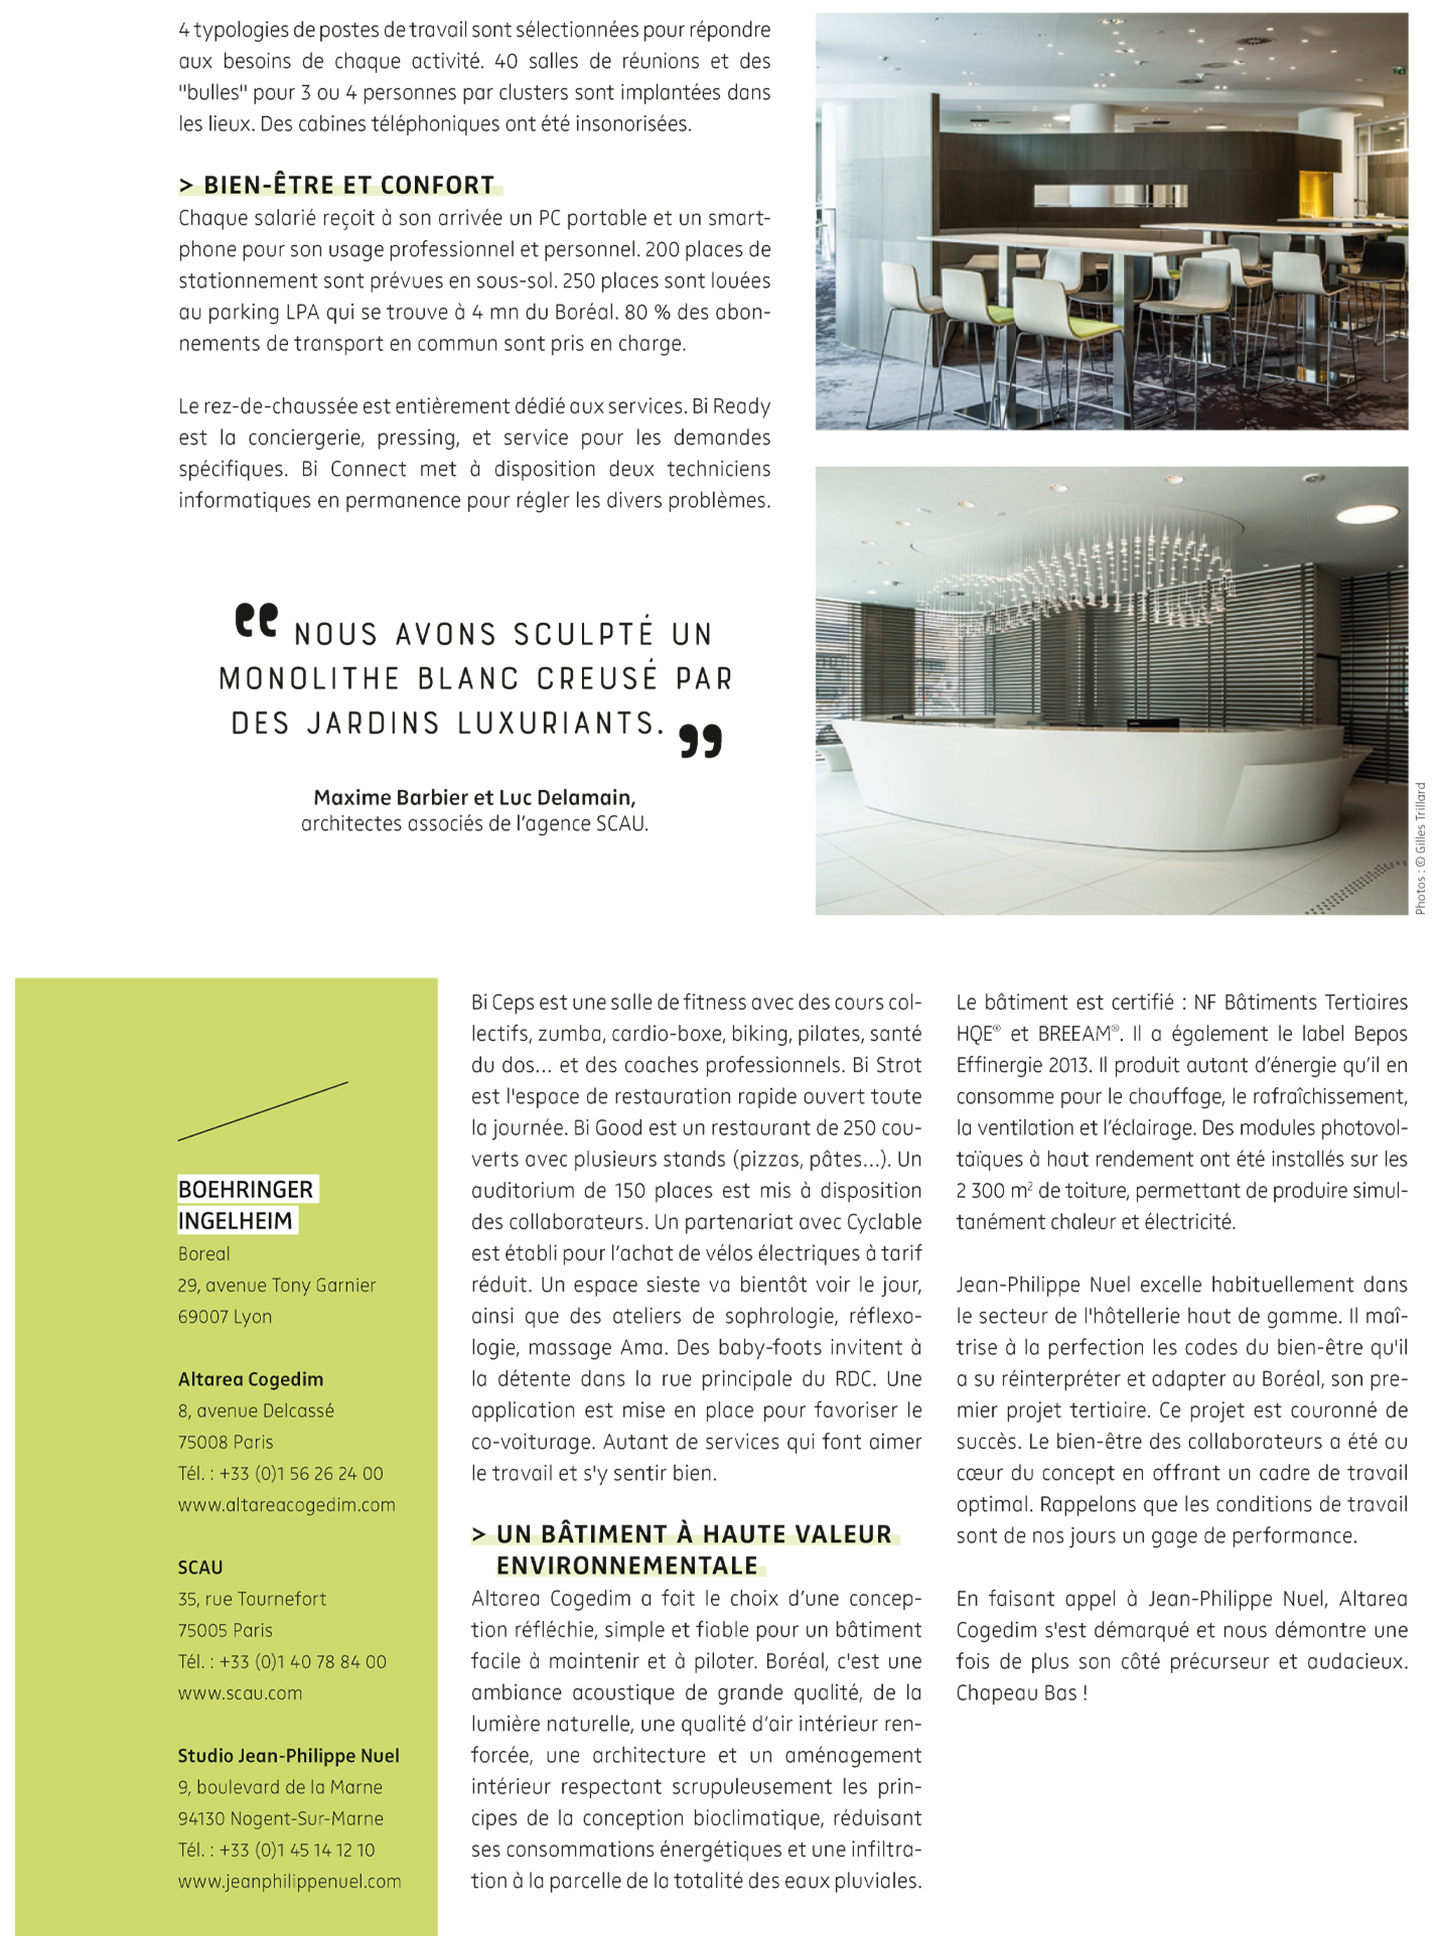 Article on the Boréal building in Lyon designed by the interior design studio Jean-Philippe Nuel, eco-responsible office building, head office, interior design